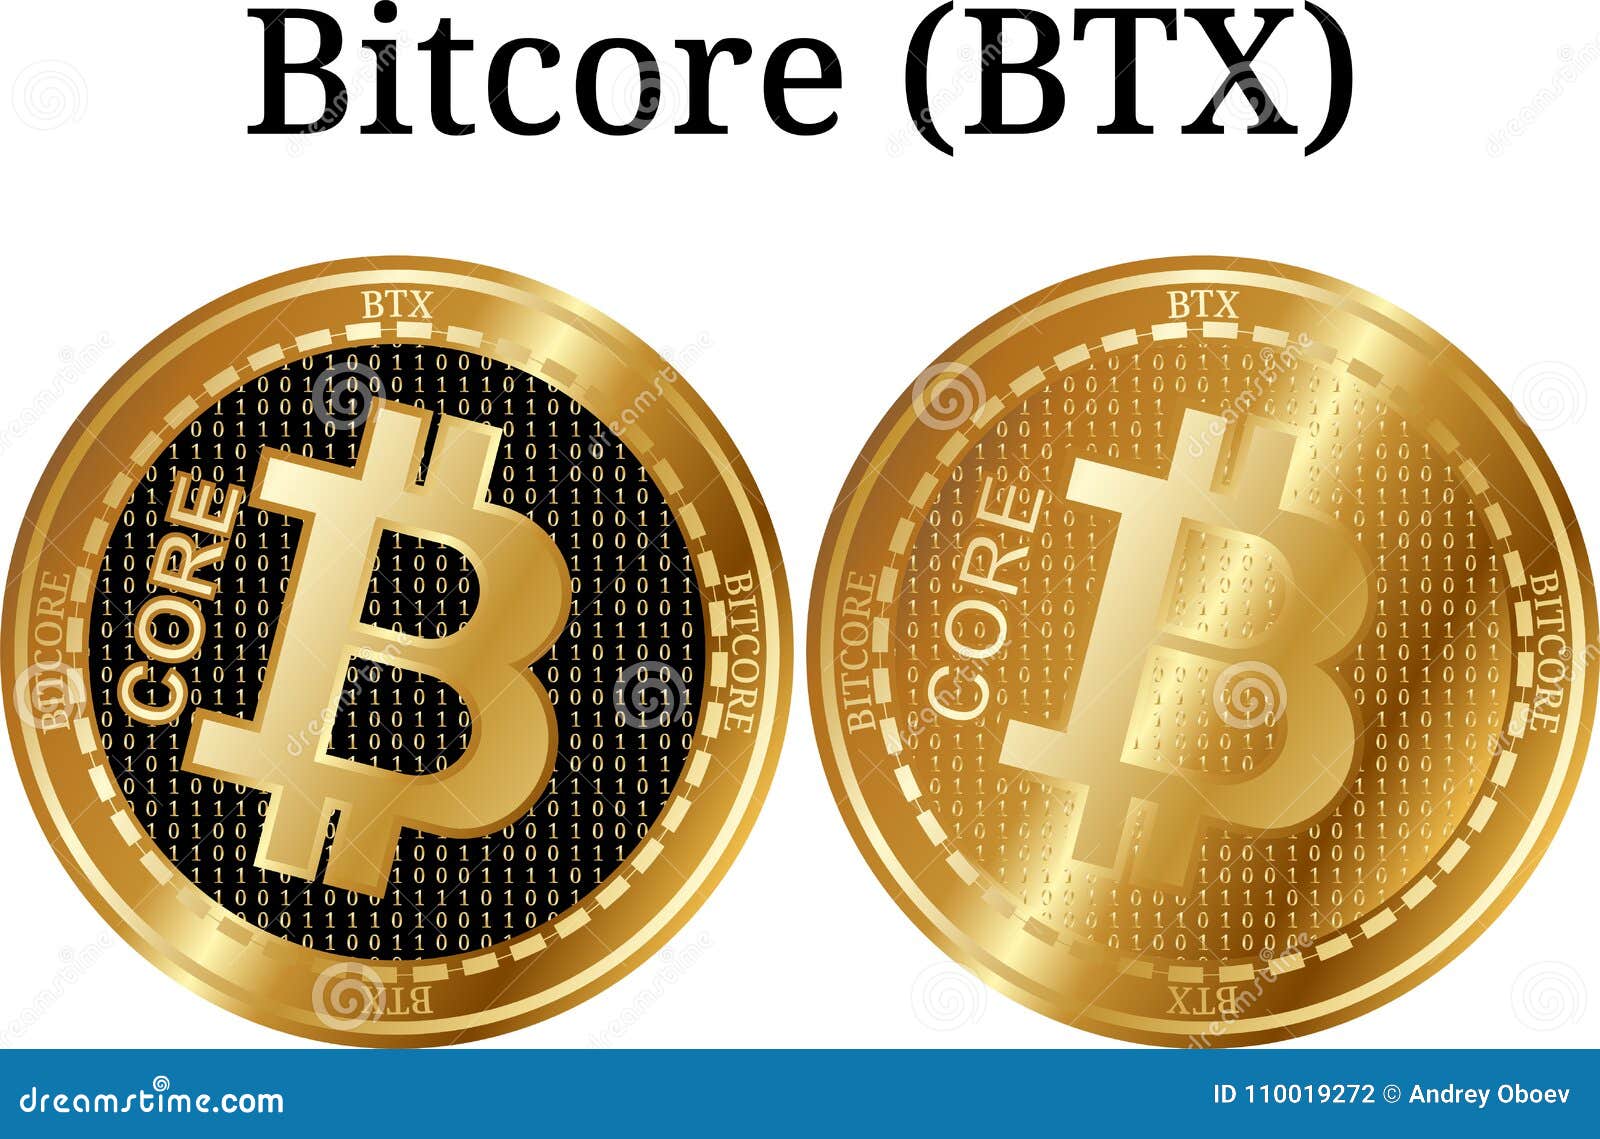 btx bitcoin